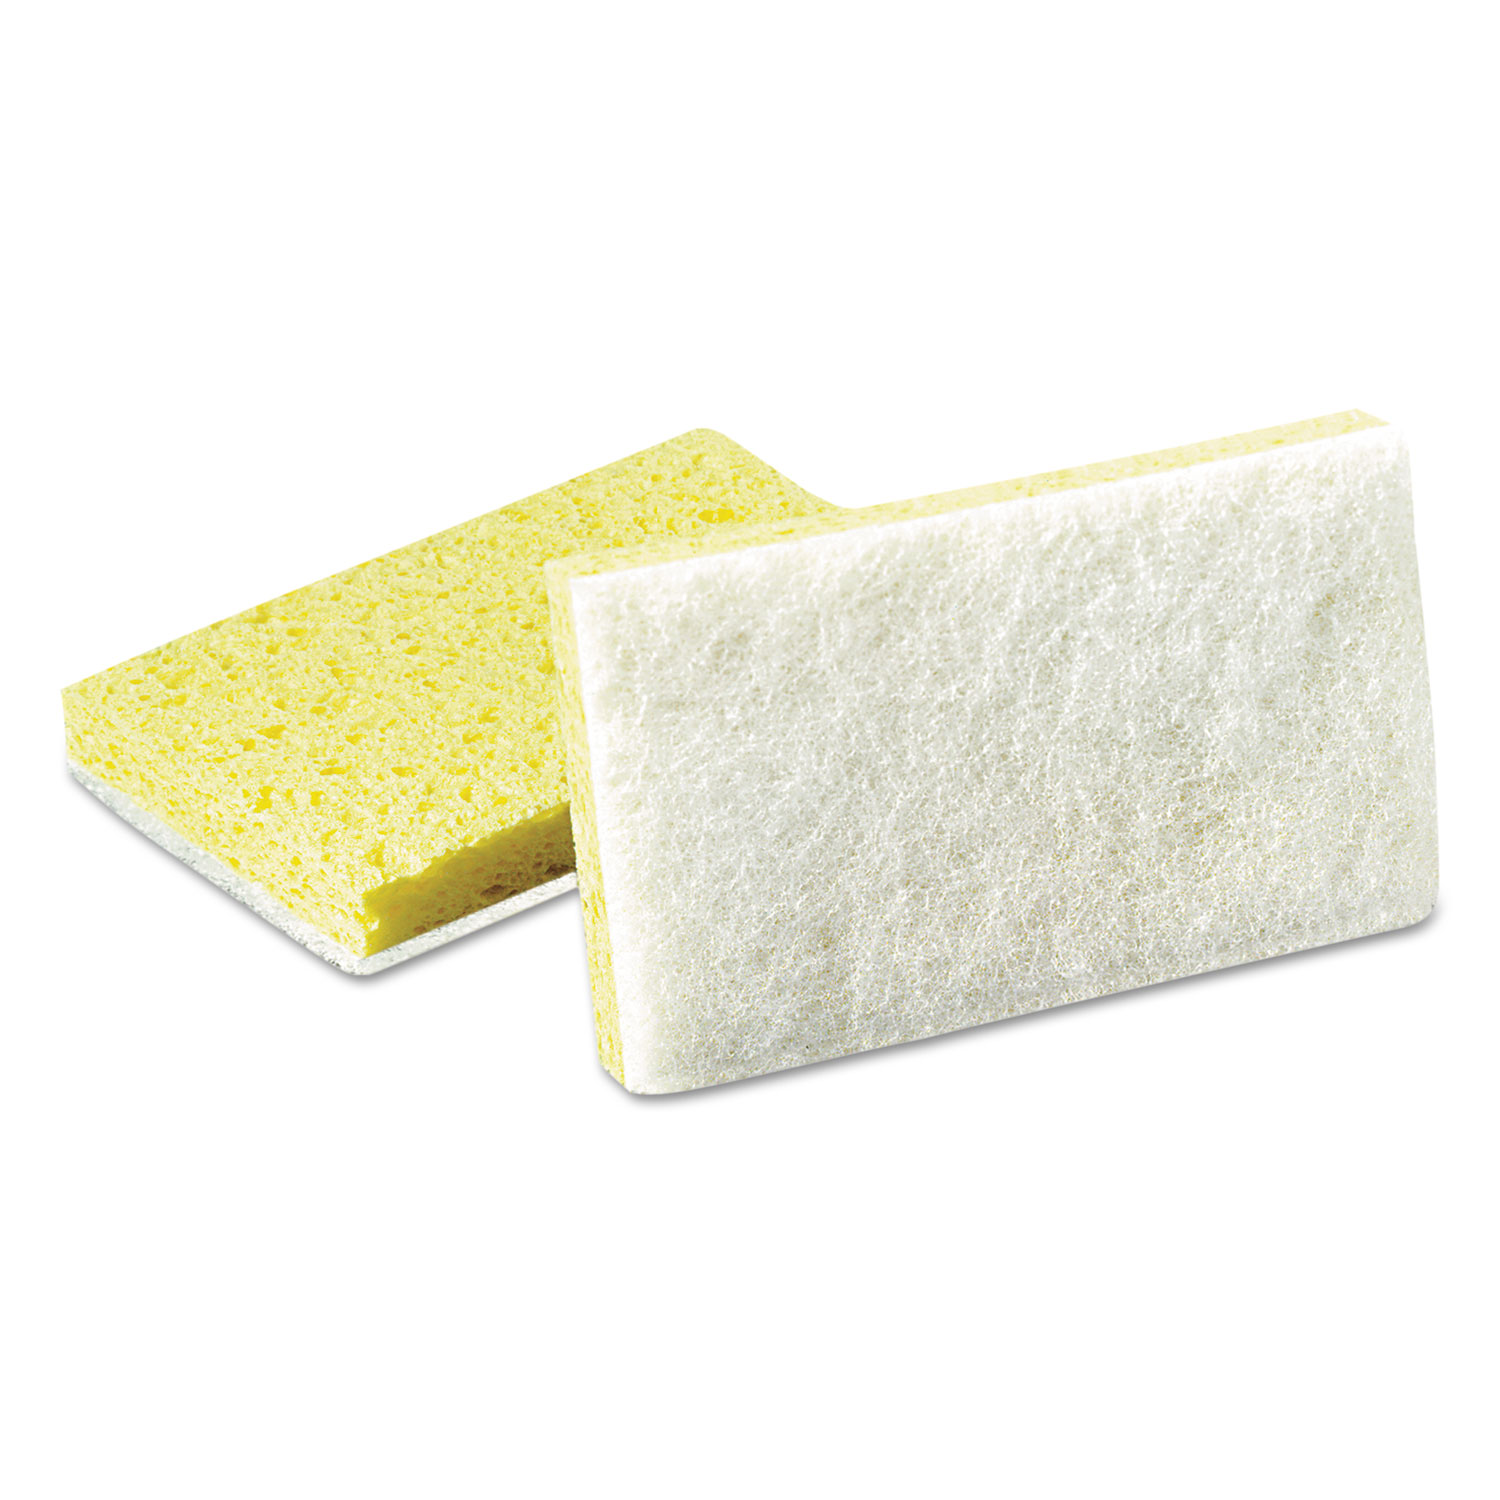  Scotch-Brite PROFESSIONAL 63 Light-Duty Scrubbing Sponge, #63, 3.5 x 5.63, Yellow/White, 20/Carton (MMM08251) 